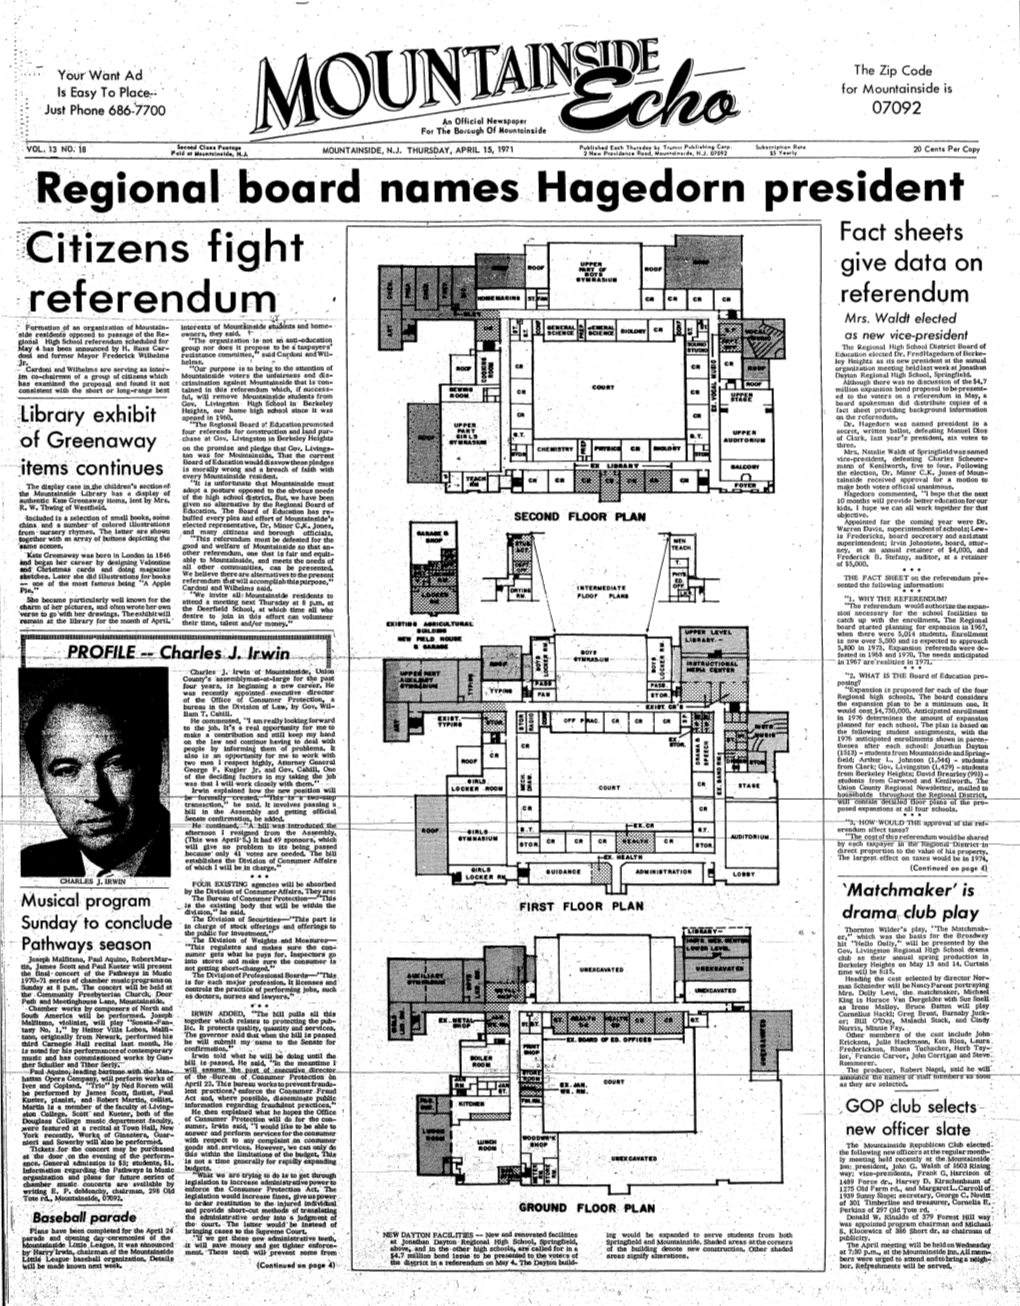 Regional Board Names Hagedorn President Citizens Fight Referendum